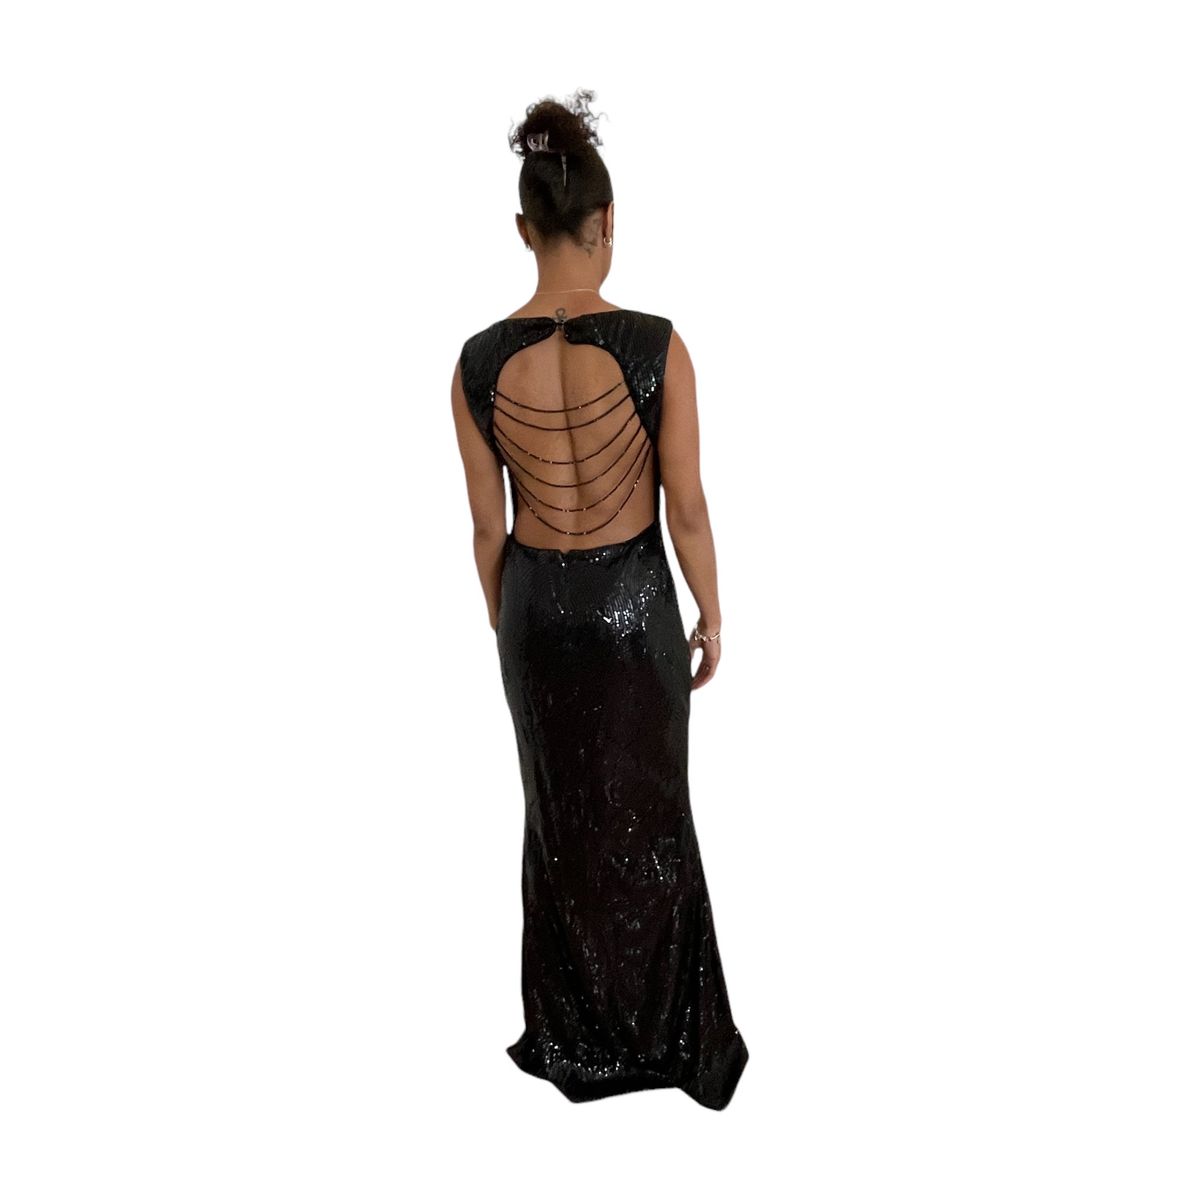 Size 4 Prom Black Side Slit Dress on Queenly